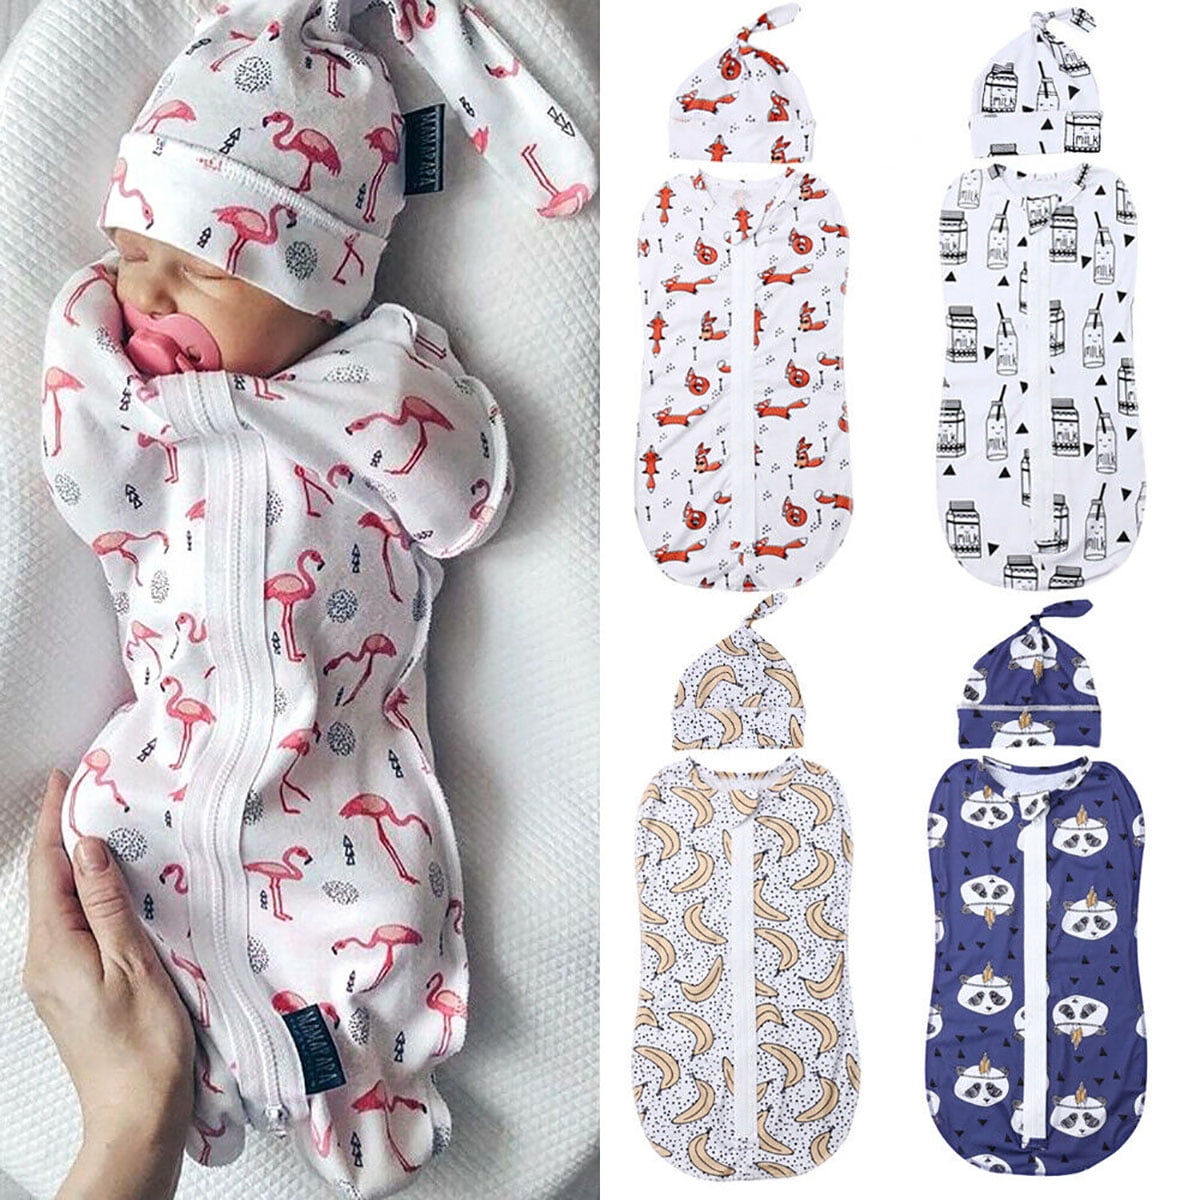 Newborn Baby infant Swaddle Wrap Blanket Sleeping Bag Sleep 1 tog dinosaurs 